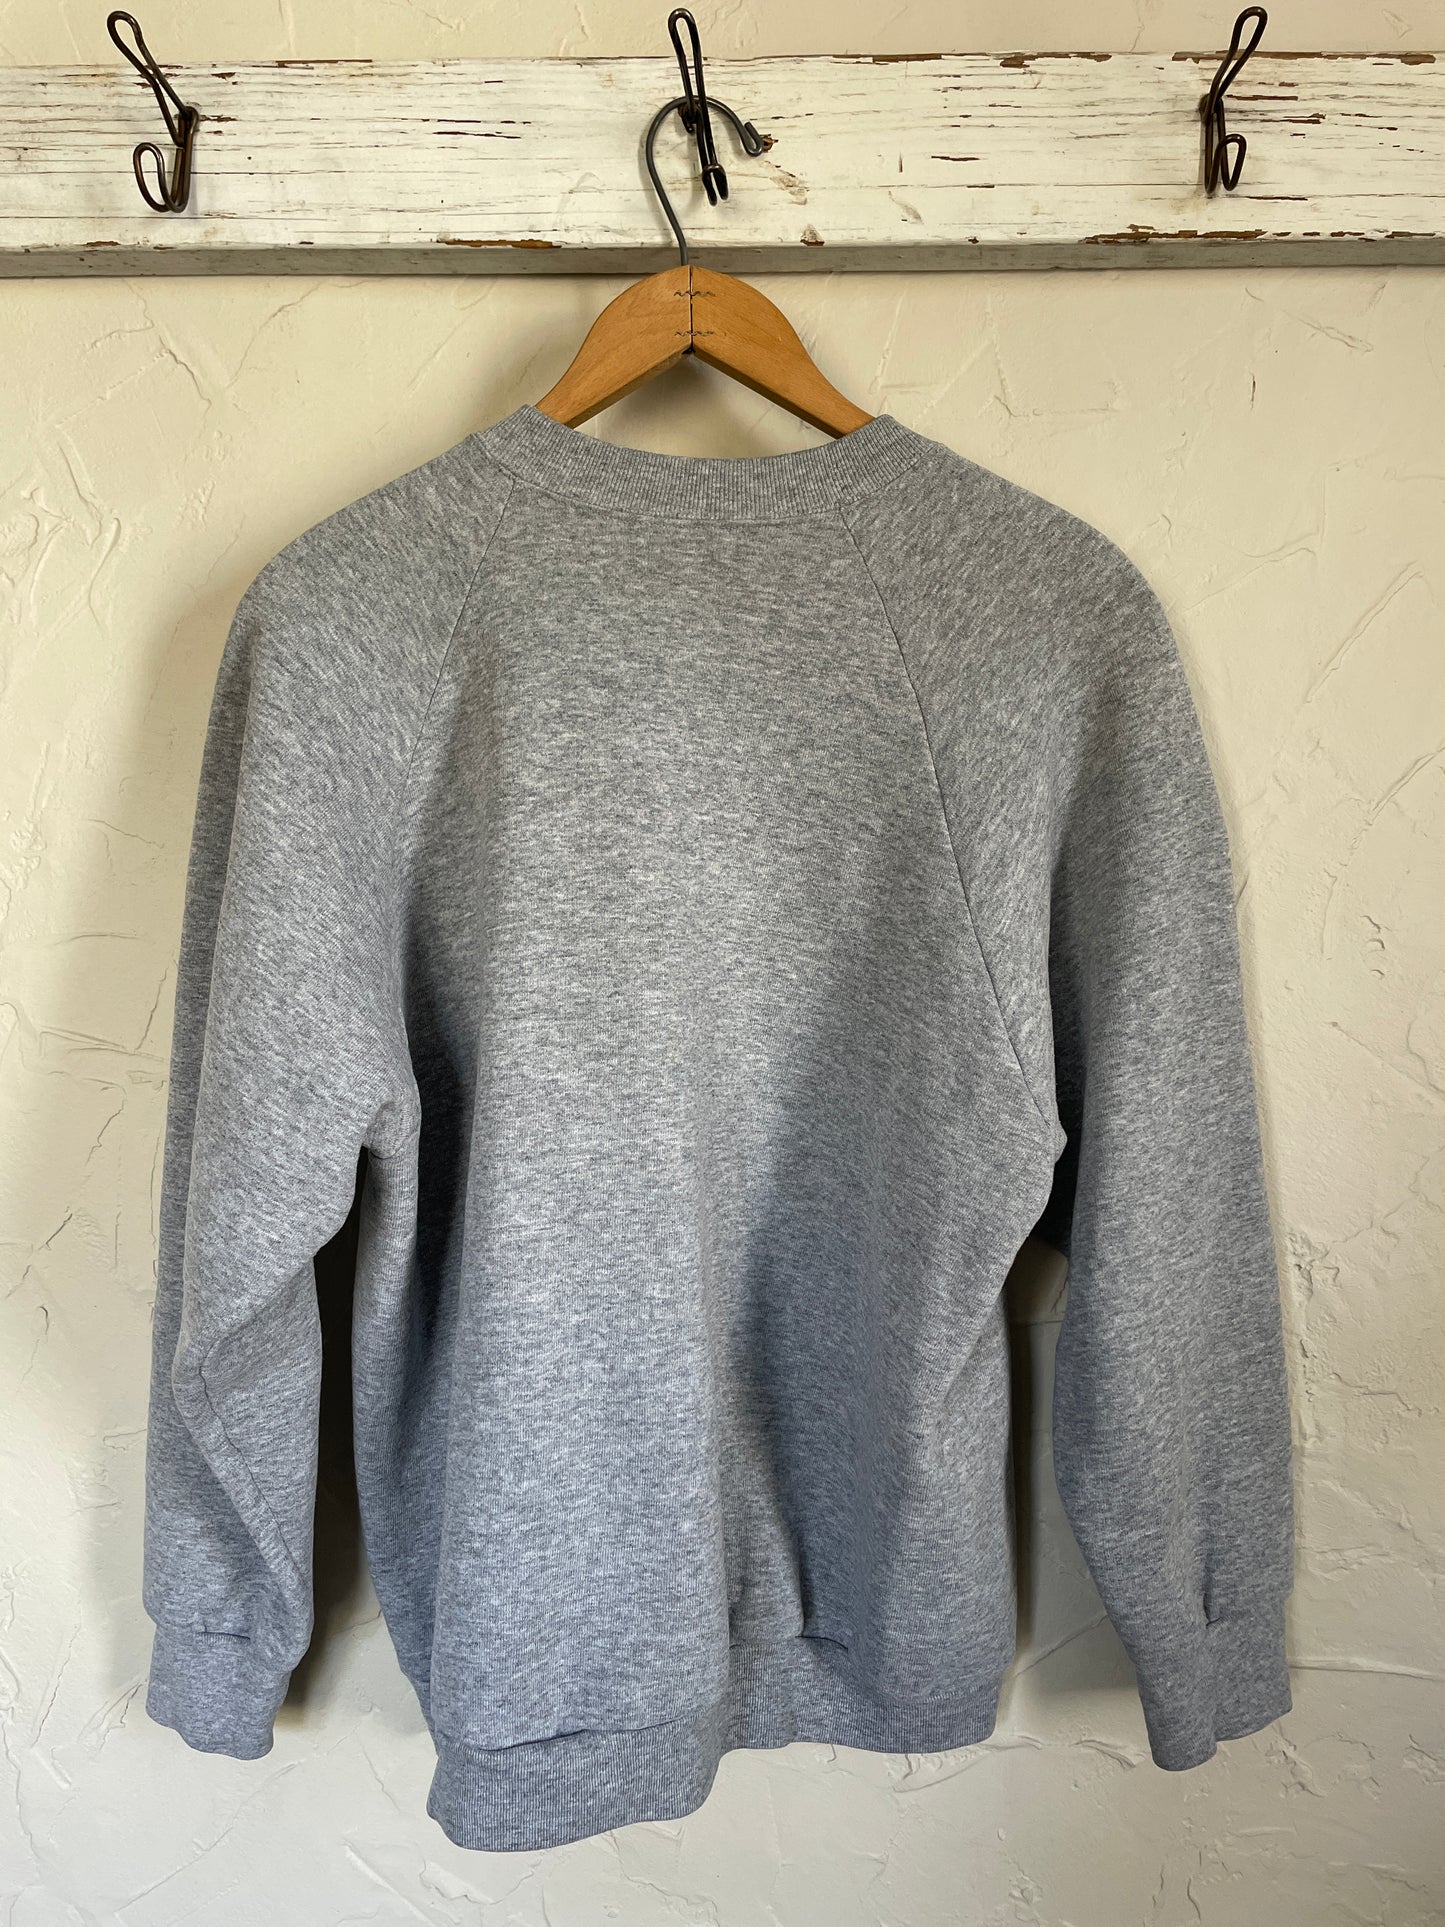 80s/90s Blank Heather Grey Sweatshirt